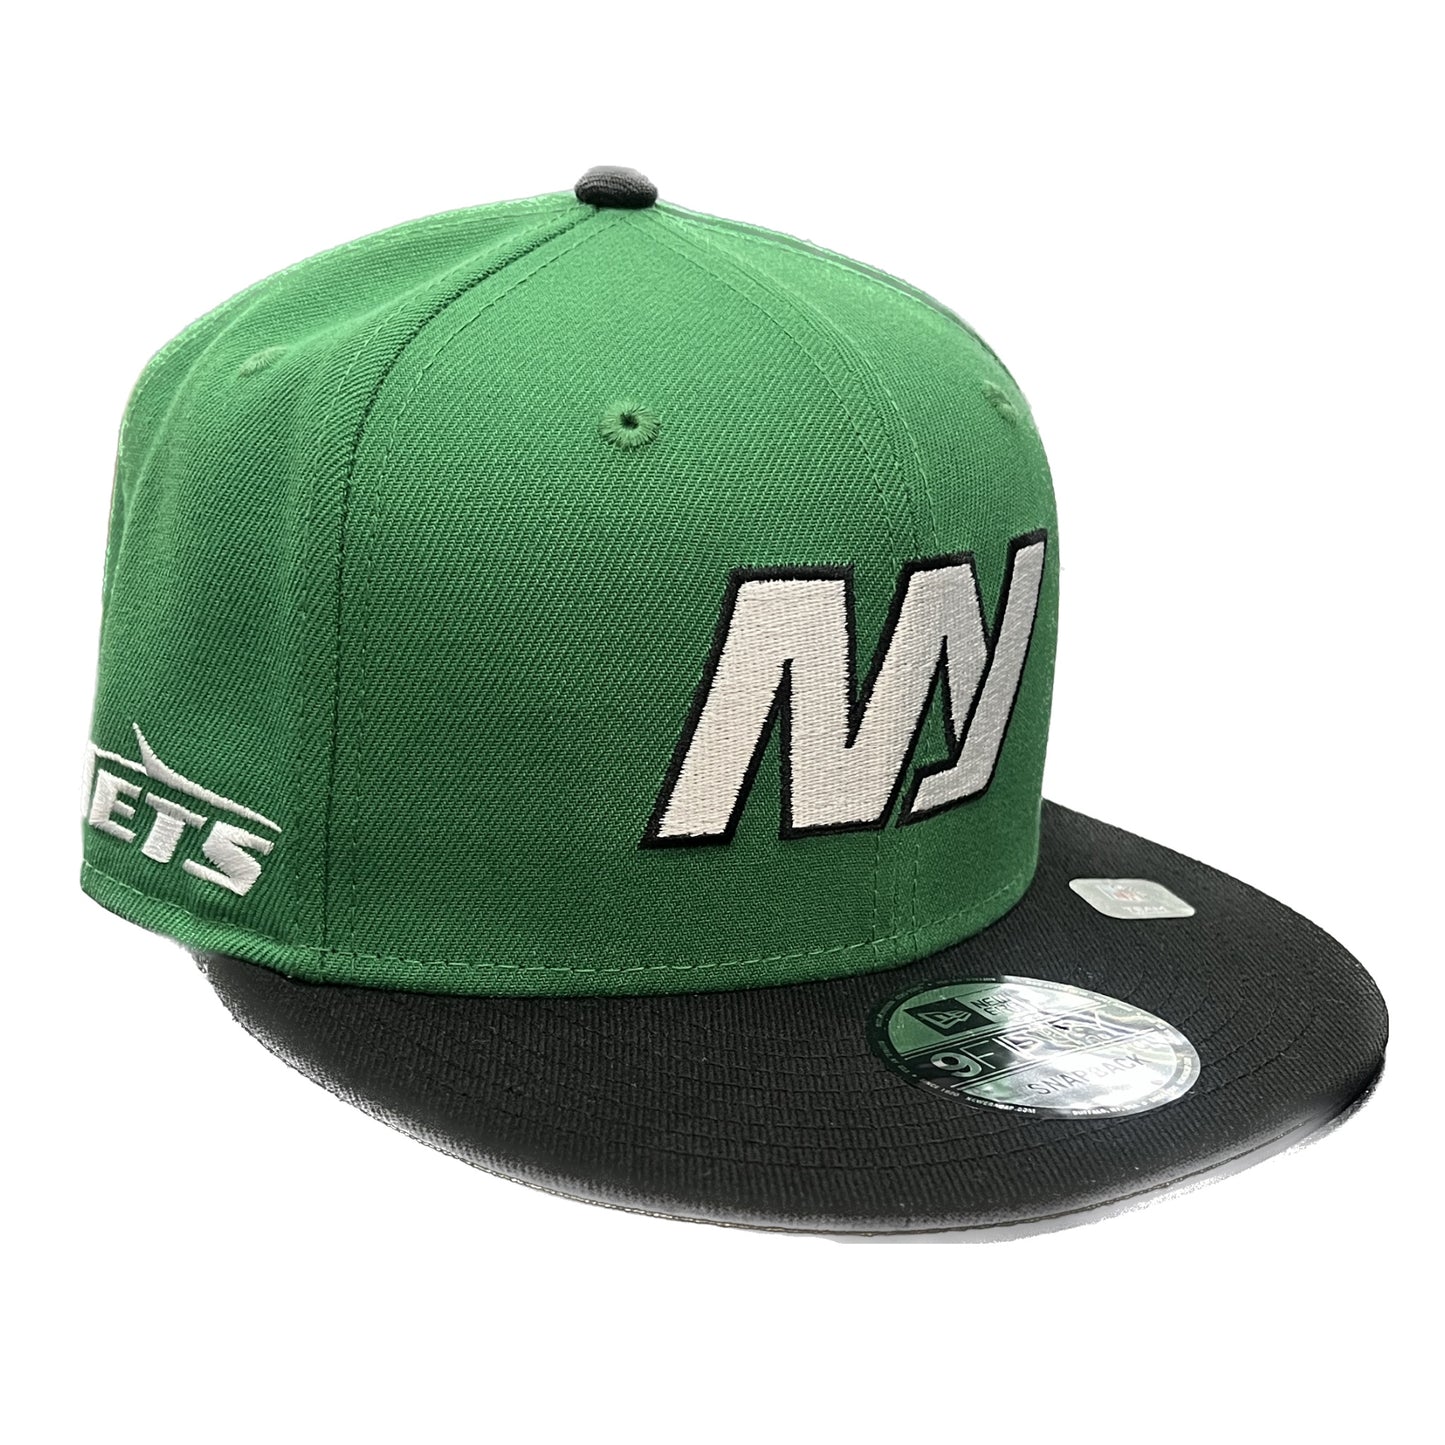 New Era 950 NFL Originals New York Jets Official Team Colors Green Baby